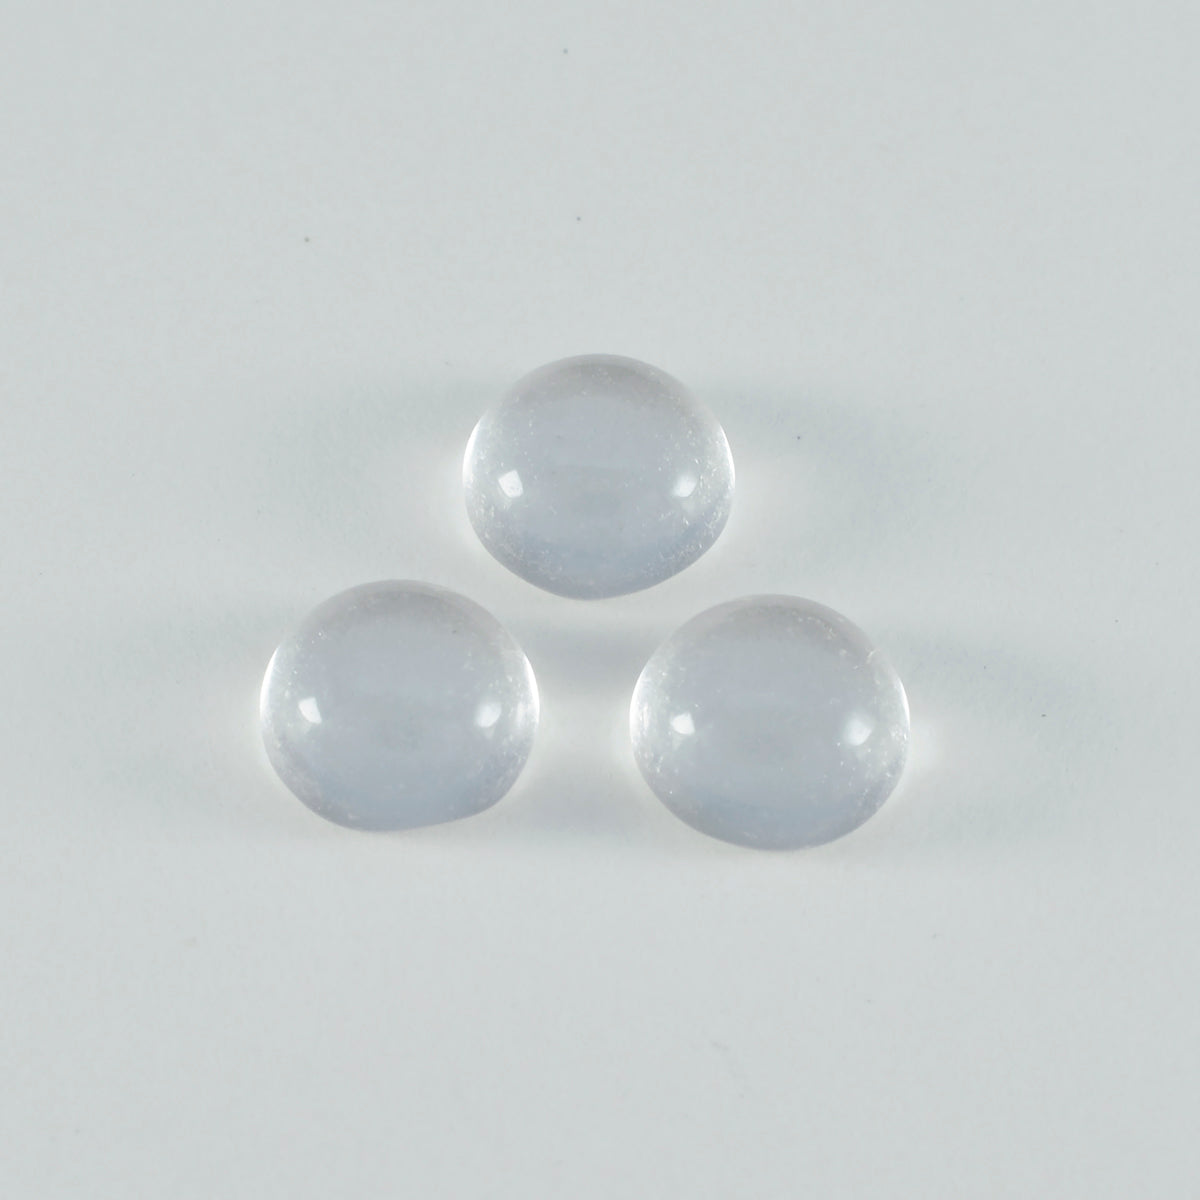 Riyogems 1PC White Crystal Quartz Cabochon 7x7 mm Round Shape A+1 Quality Gem